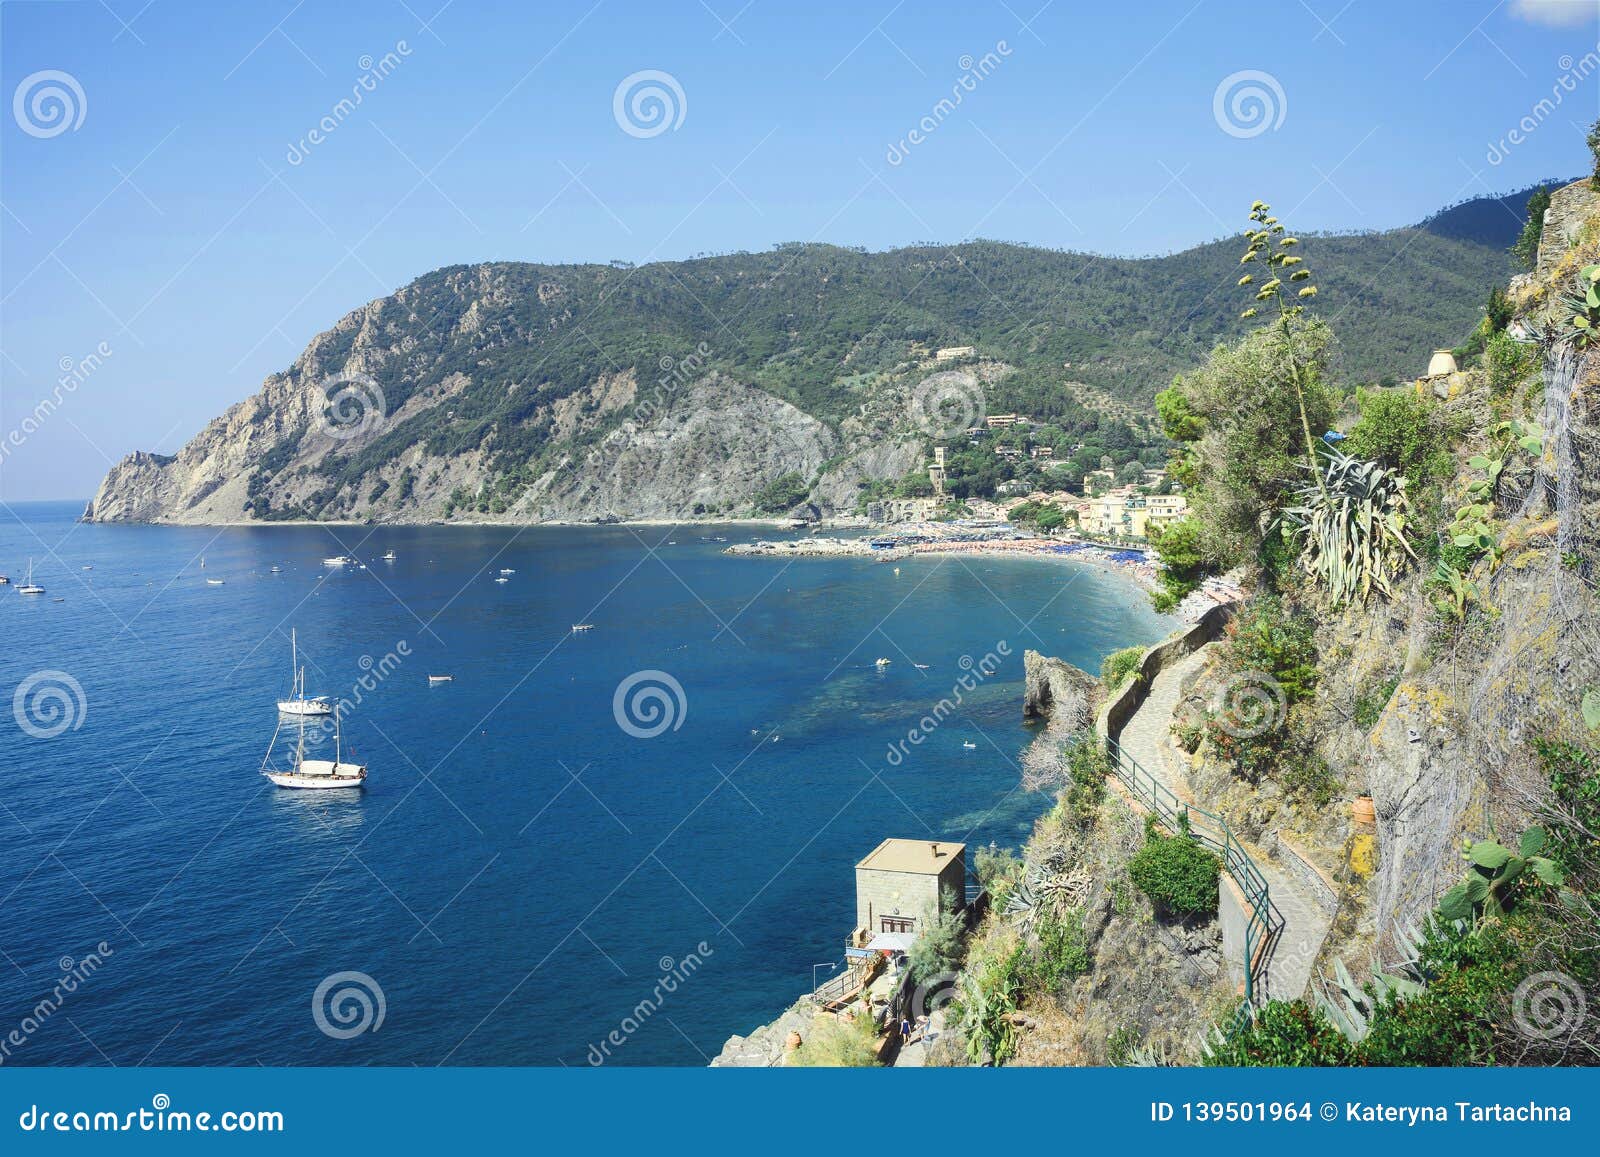 Panorama Of Monterosso Al Mare Beach In Summer Season A Coastal Village And Resort In Cinque Terre Liguria Italy Stock Photo Image Of Resort Landscape 139501964